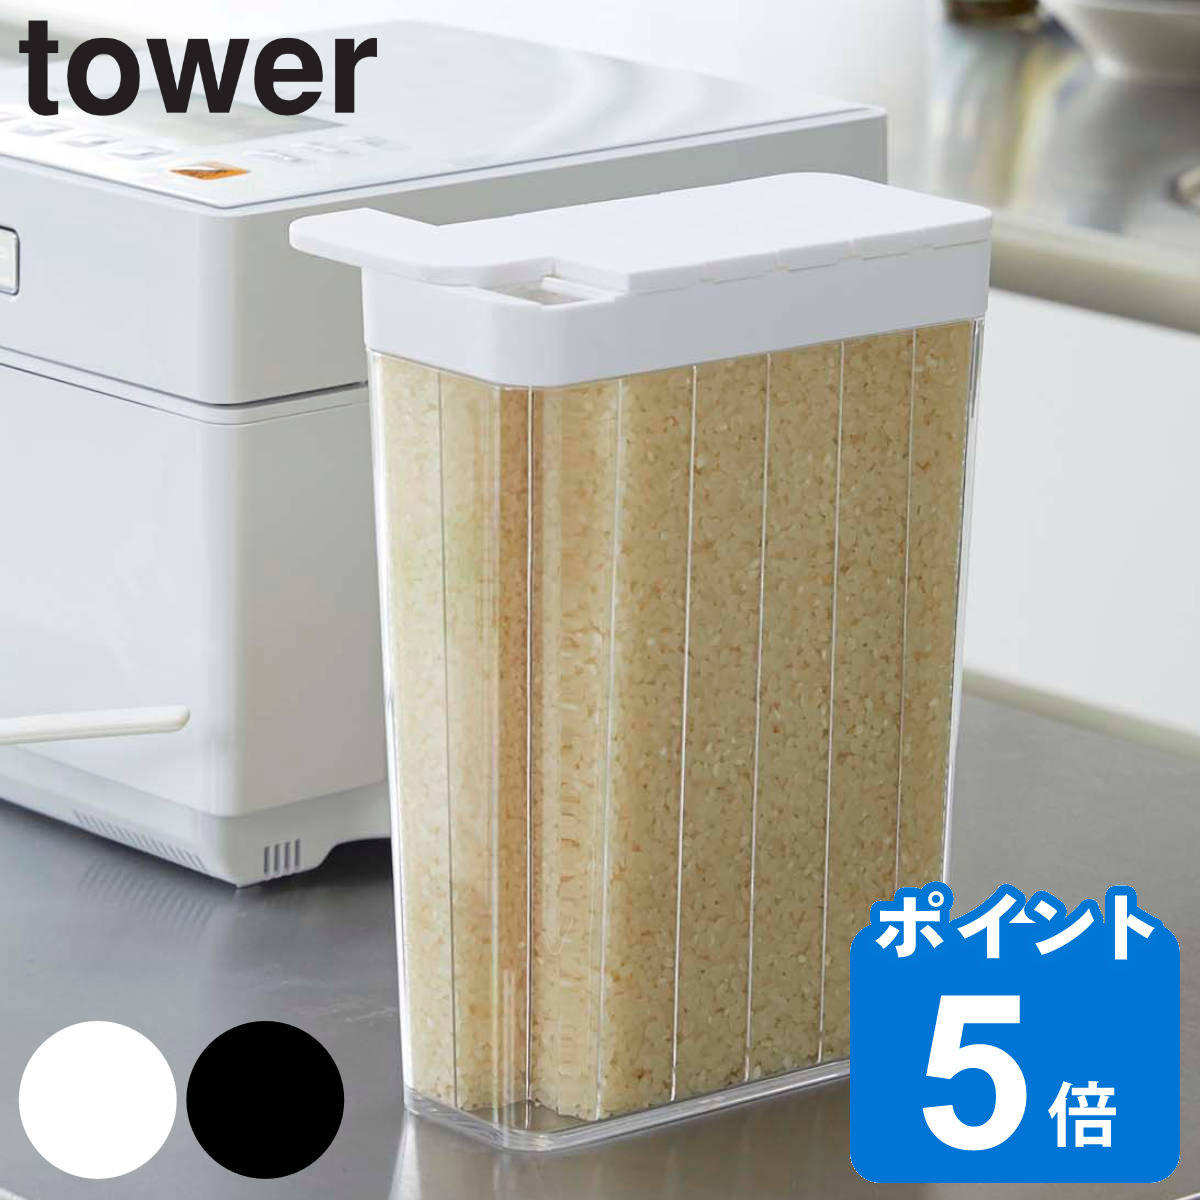 tower 1合分別 冷蔵庫用米びつ タワー